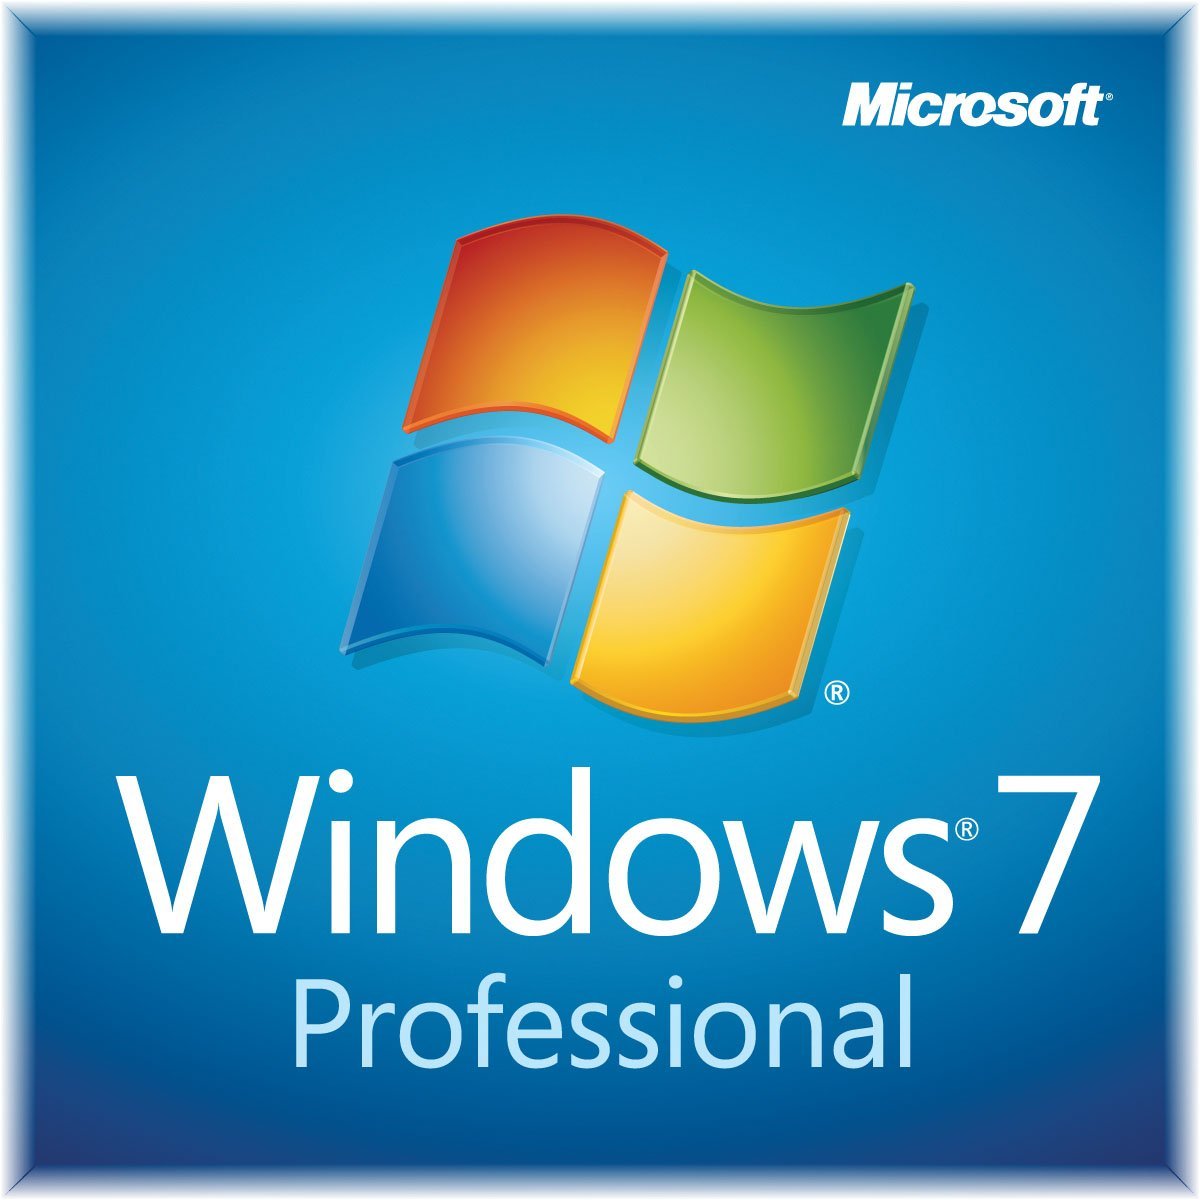 Window 7 free download windows vista